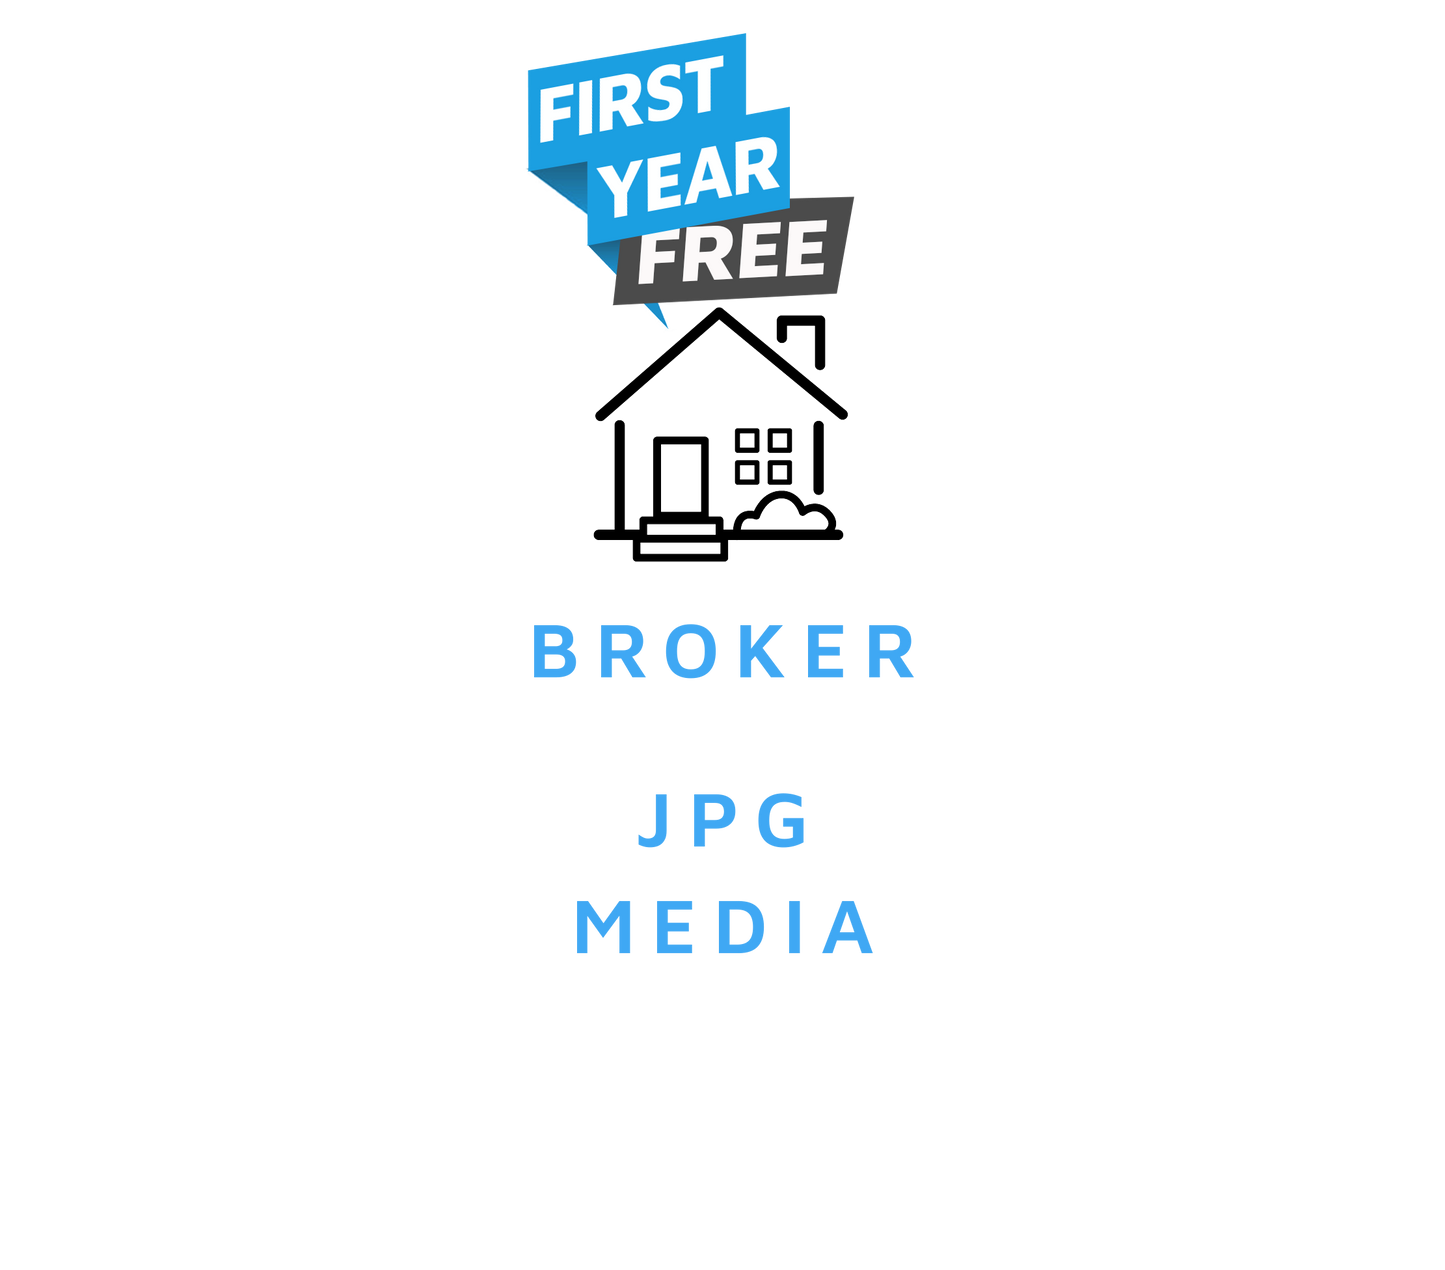 FIRST YEAR FREE - Broker - JPG Media - use code JPG5